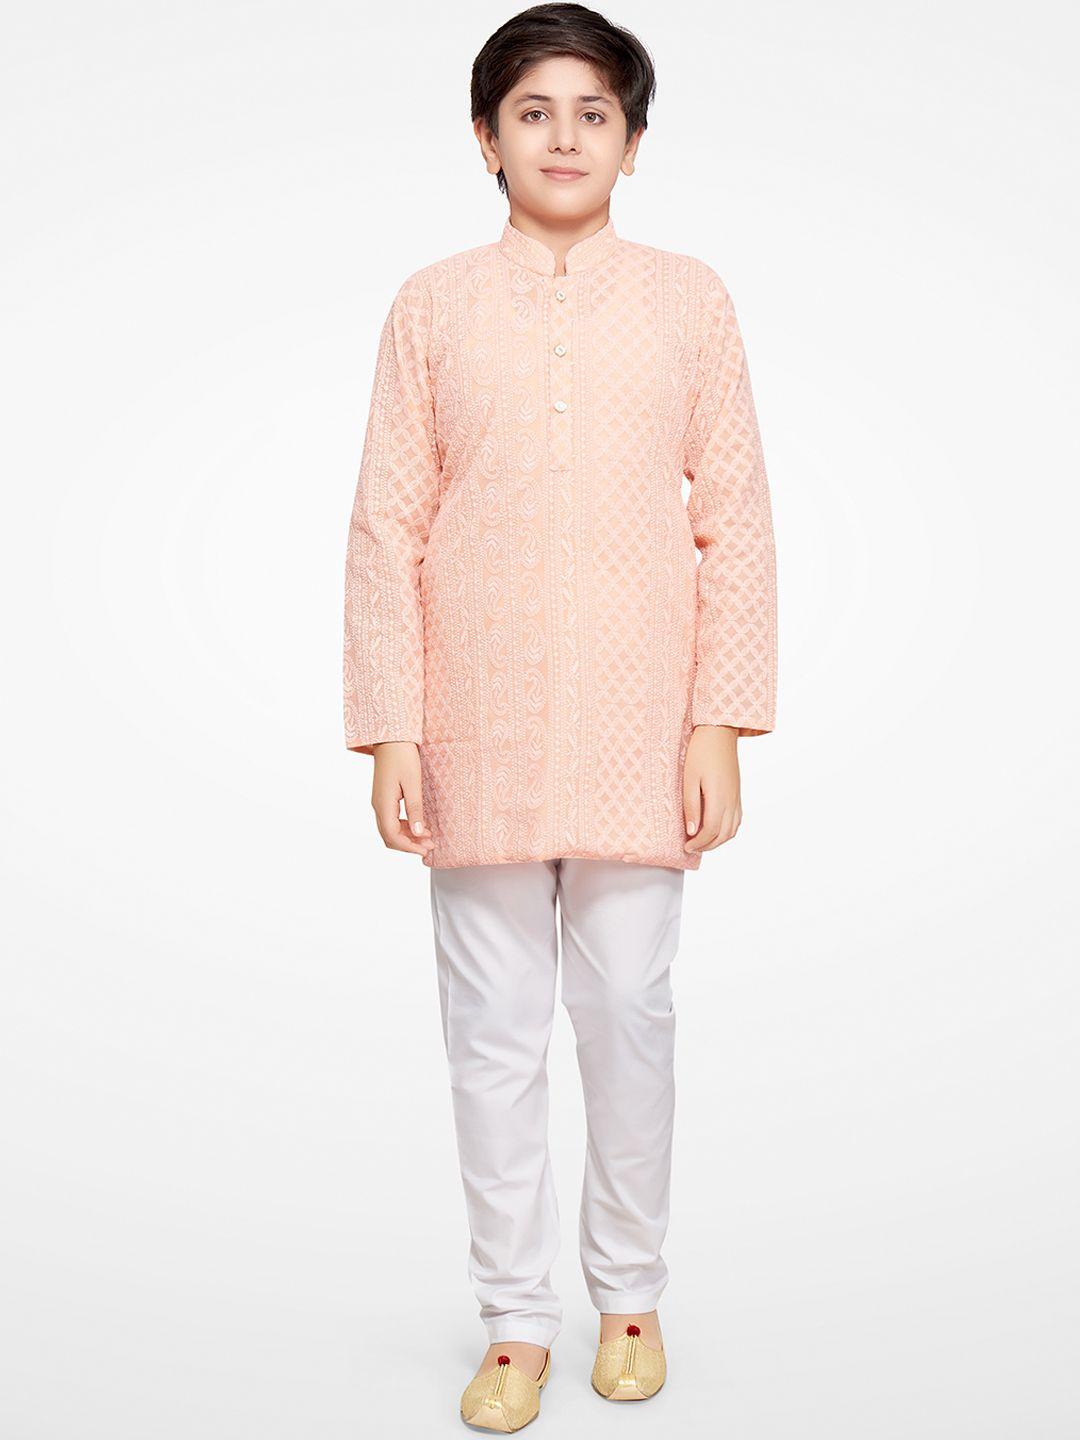 jeetethnics boys peach-coloured & white embroidered chikankari kurta with pyjamas